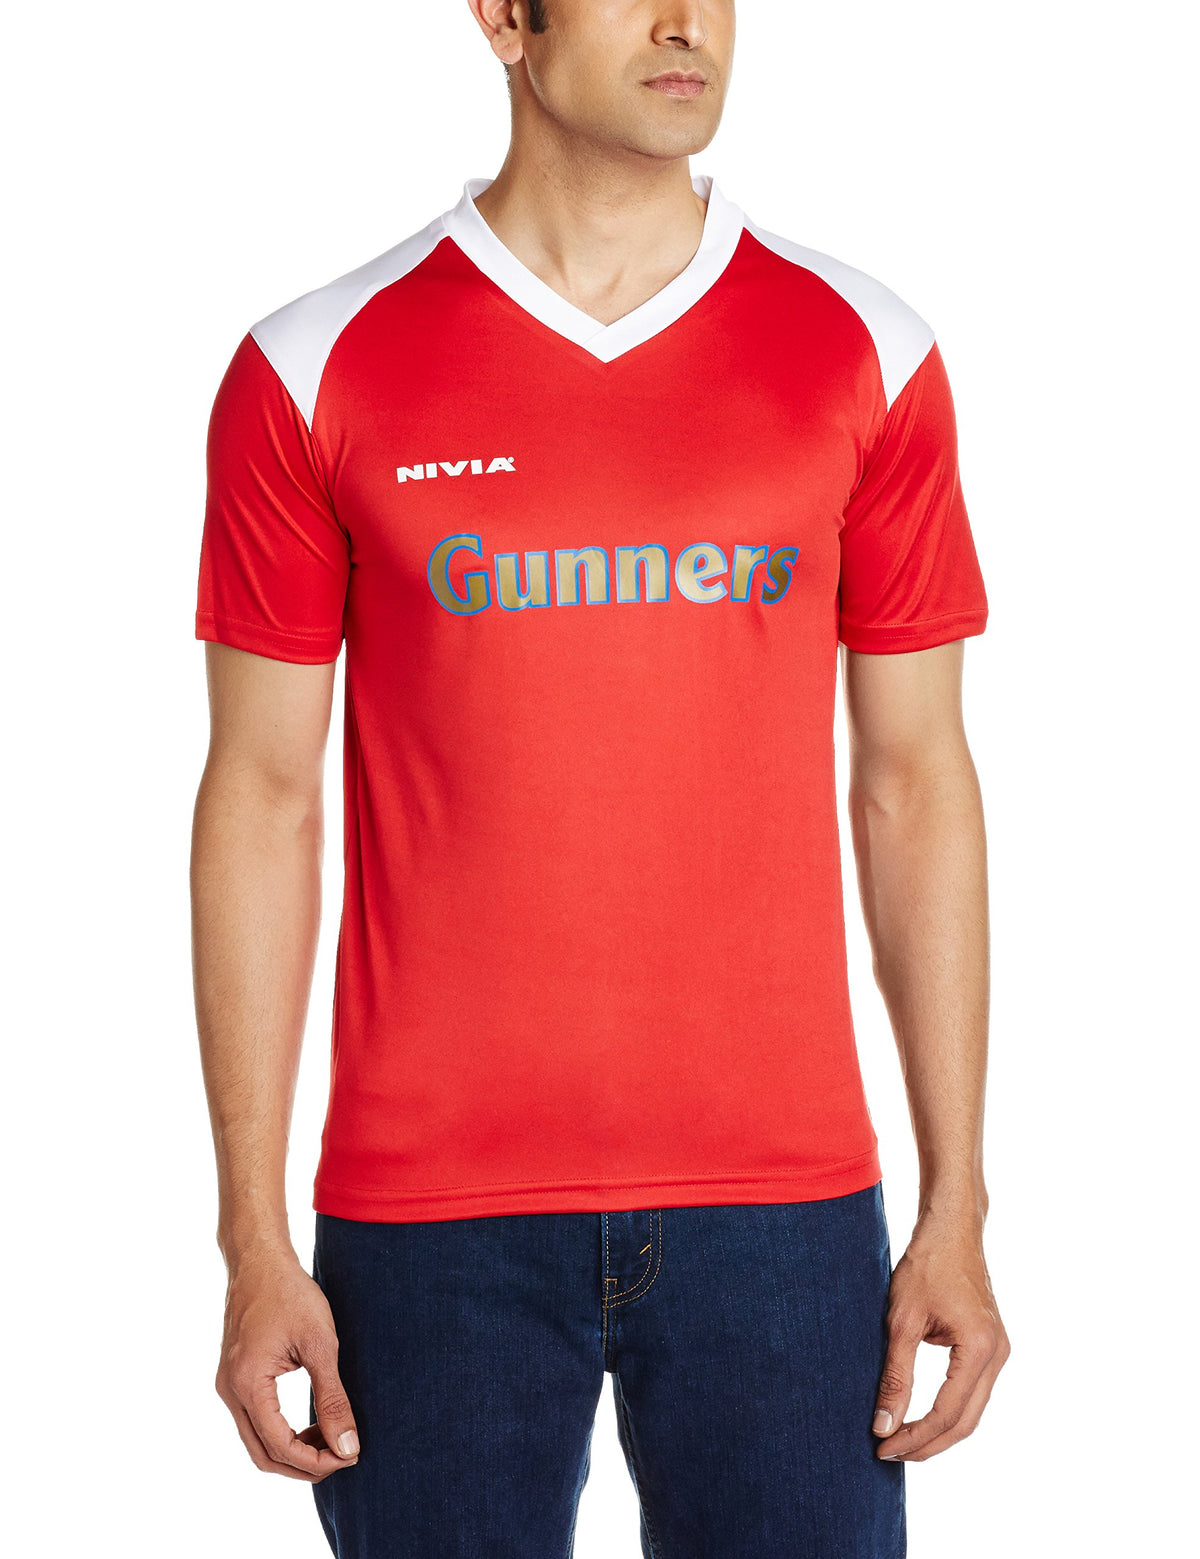 Nivia Gunners Club T-Shirt, Large (Red/White)